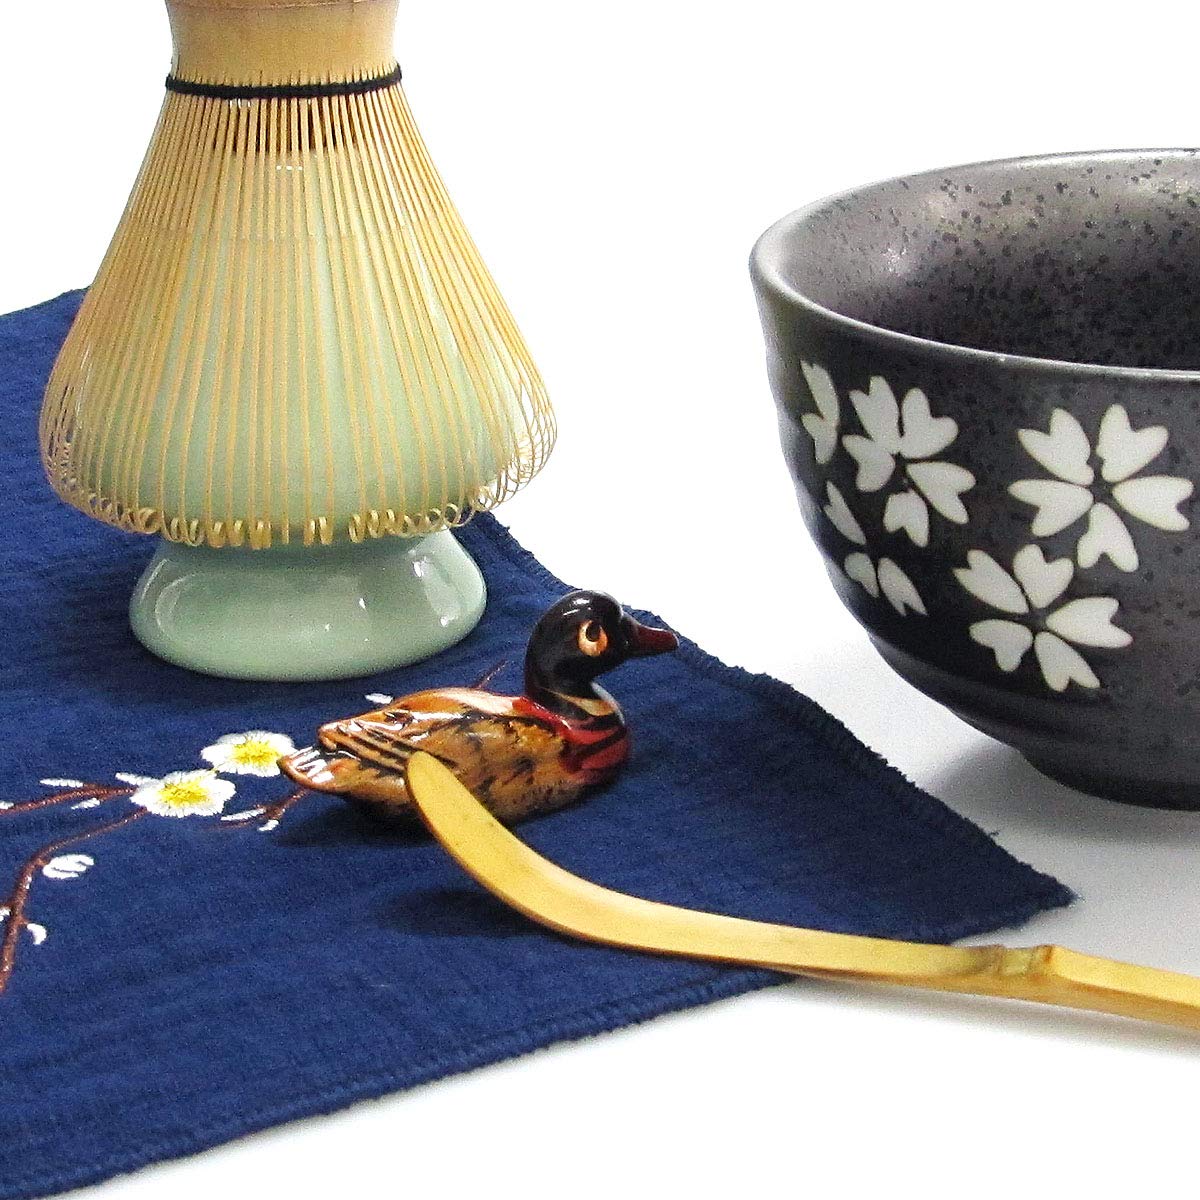 Artcome Japanese Matcha Tea Set, Matcha Whisk, Traditional Scoop, Matcha Bowl, Black Bamboo Tray, Ceramic Whisk Holder, Matcha Caddy, Handmade Matcha Ceremony Kit For Japanese Tea Ceremony (10Pcs)